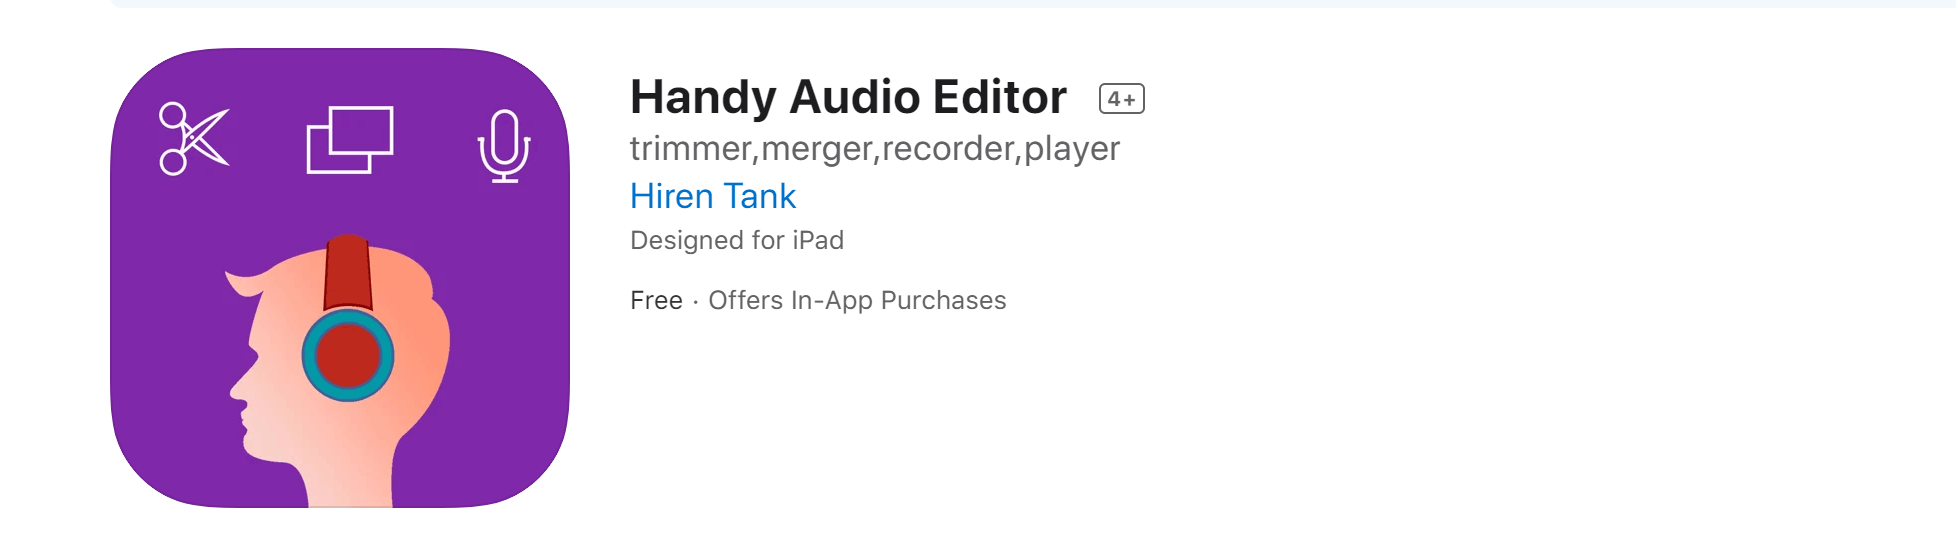 handy audio editor